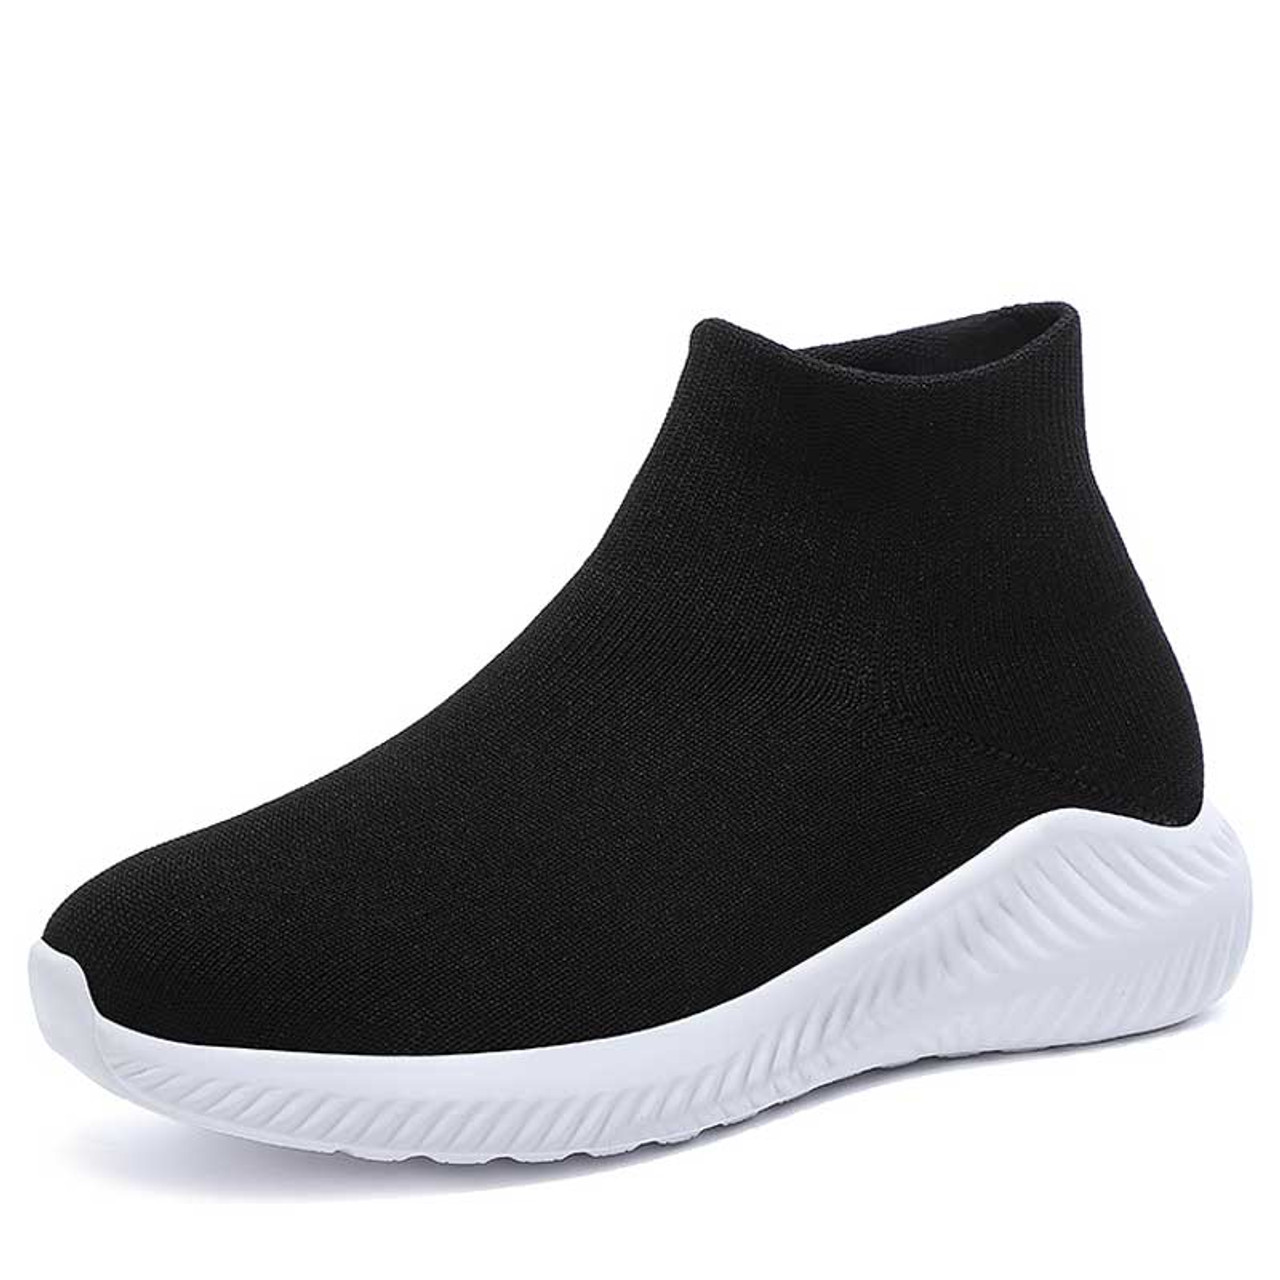 Black white plain flyknit sock like fit slip on shoe sneaker | Womens ...